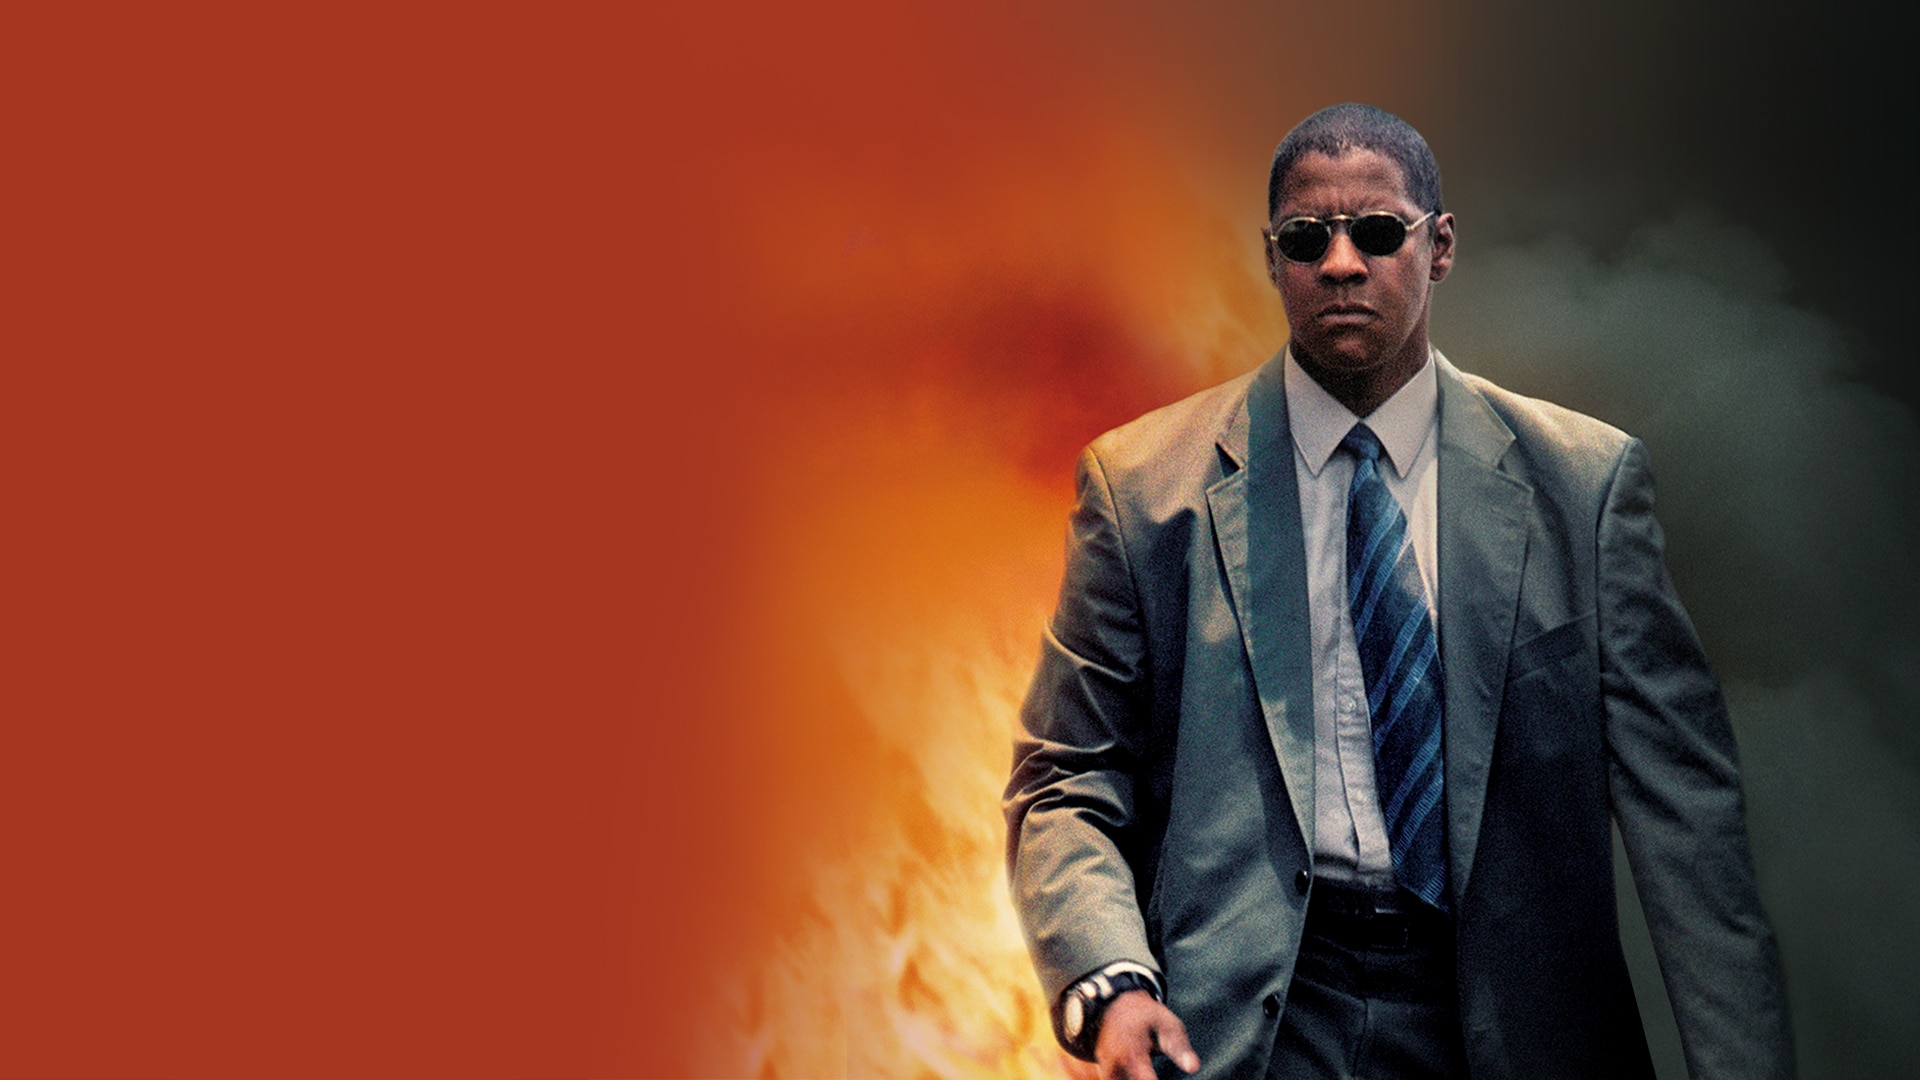 man on fire movie wallpaper